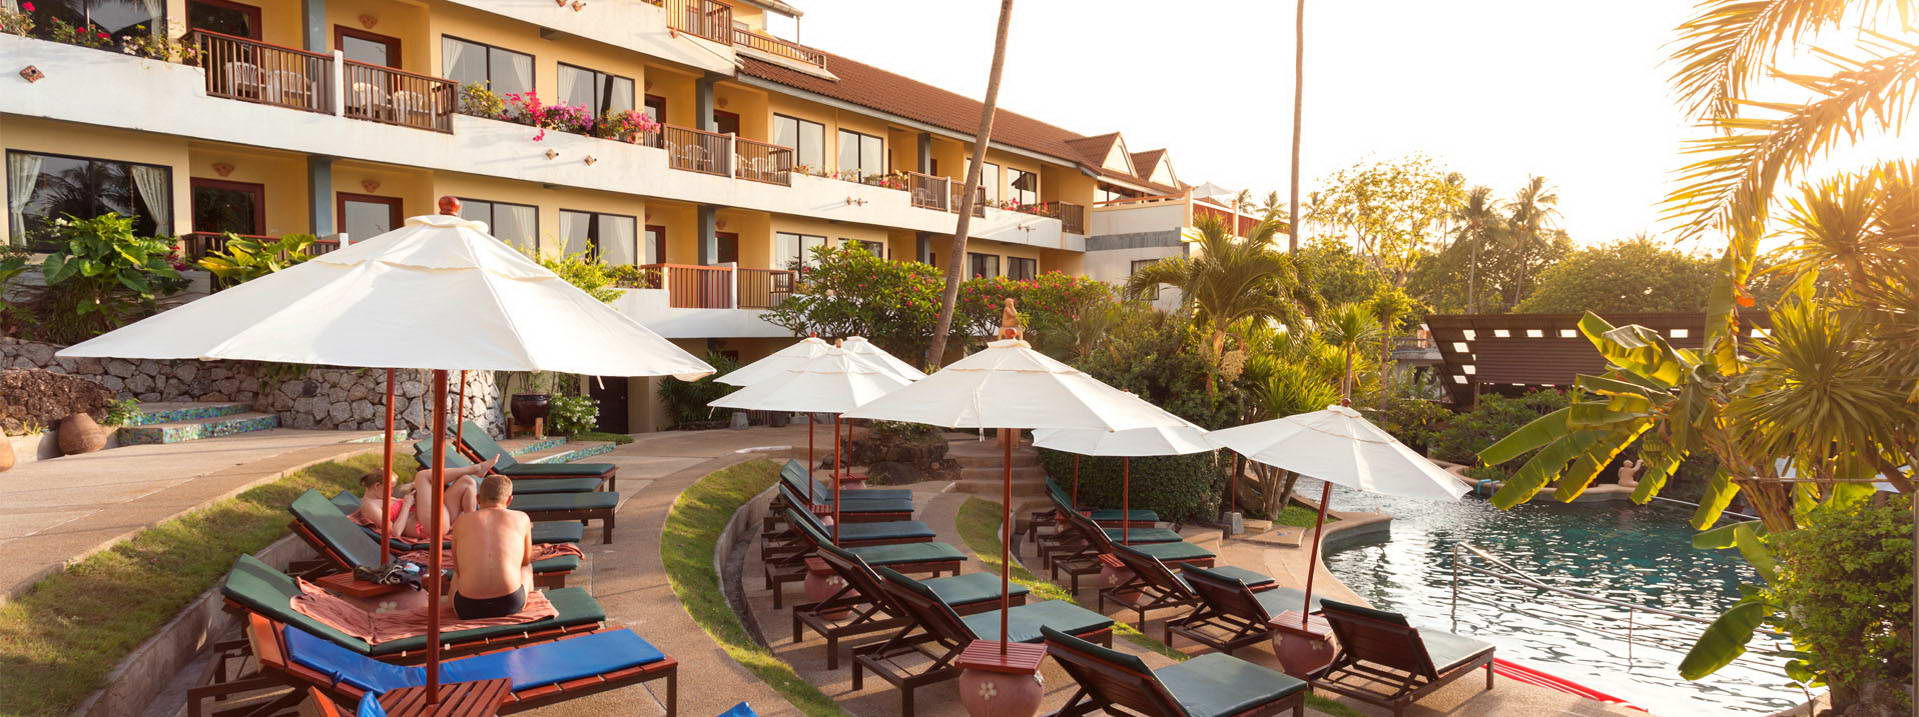 Karona Resort Spa - Resort Spa in Karon Beach Phuket Thailand